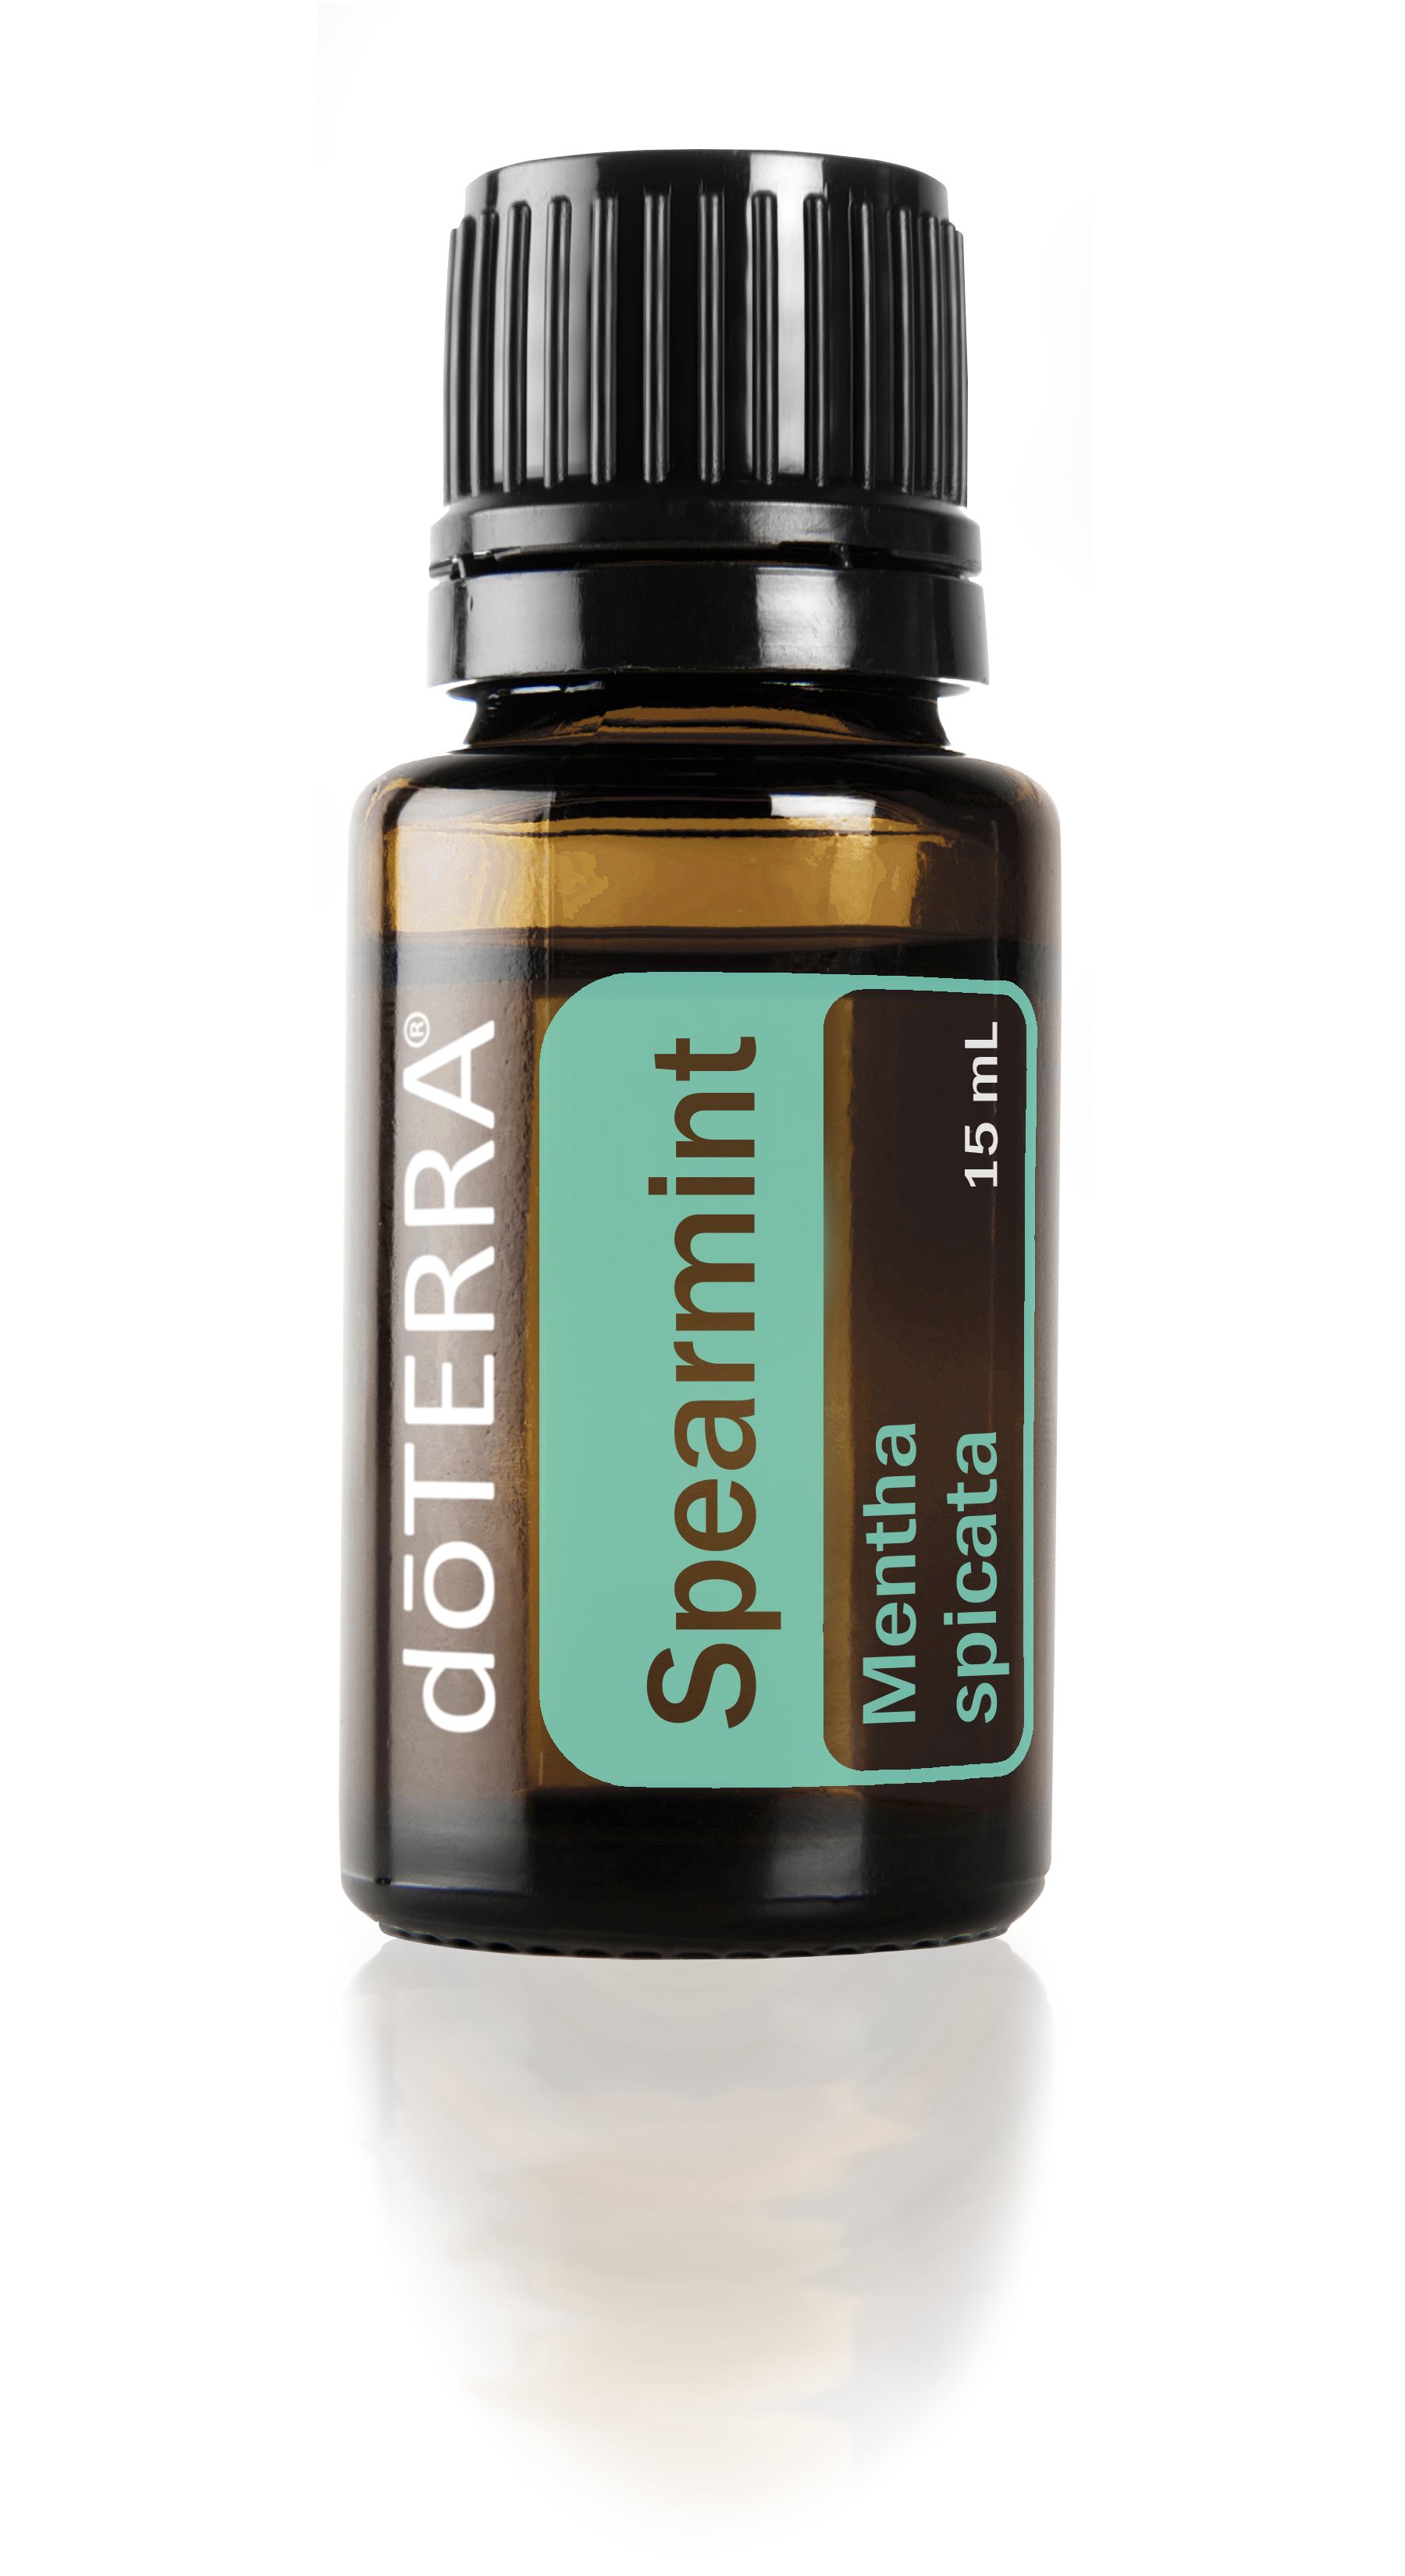 Spearmint Essential Oil 🆕